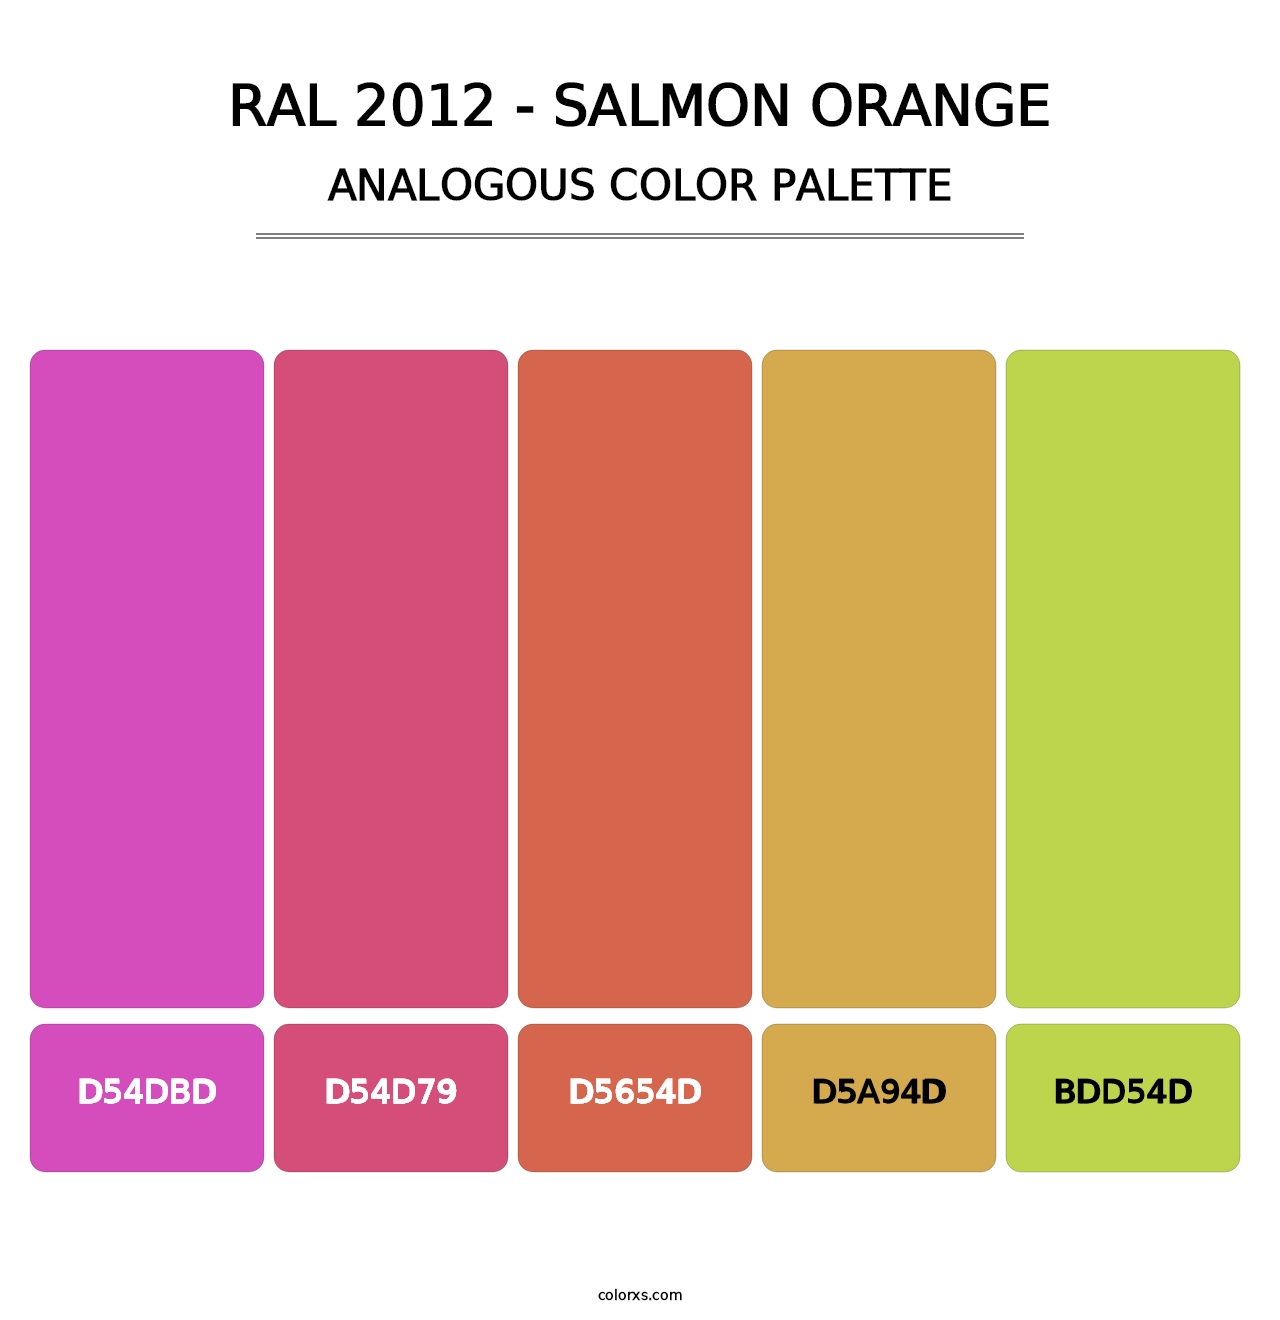 RAL 2012 - Salmon Orange - Analogous Color Palette